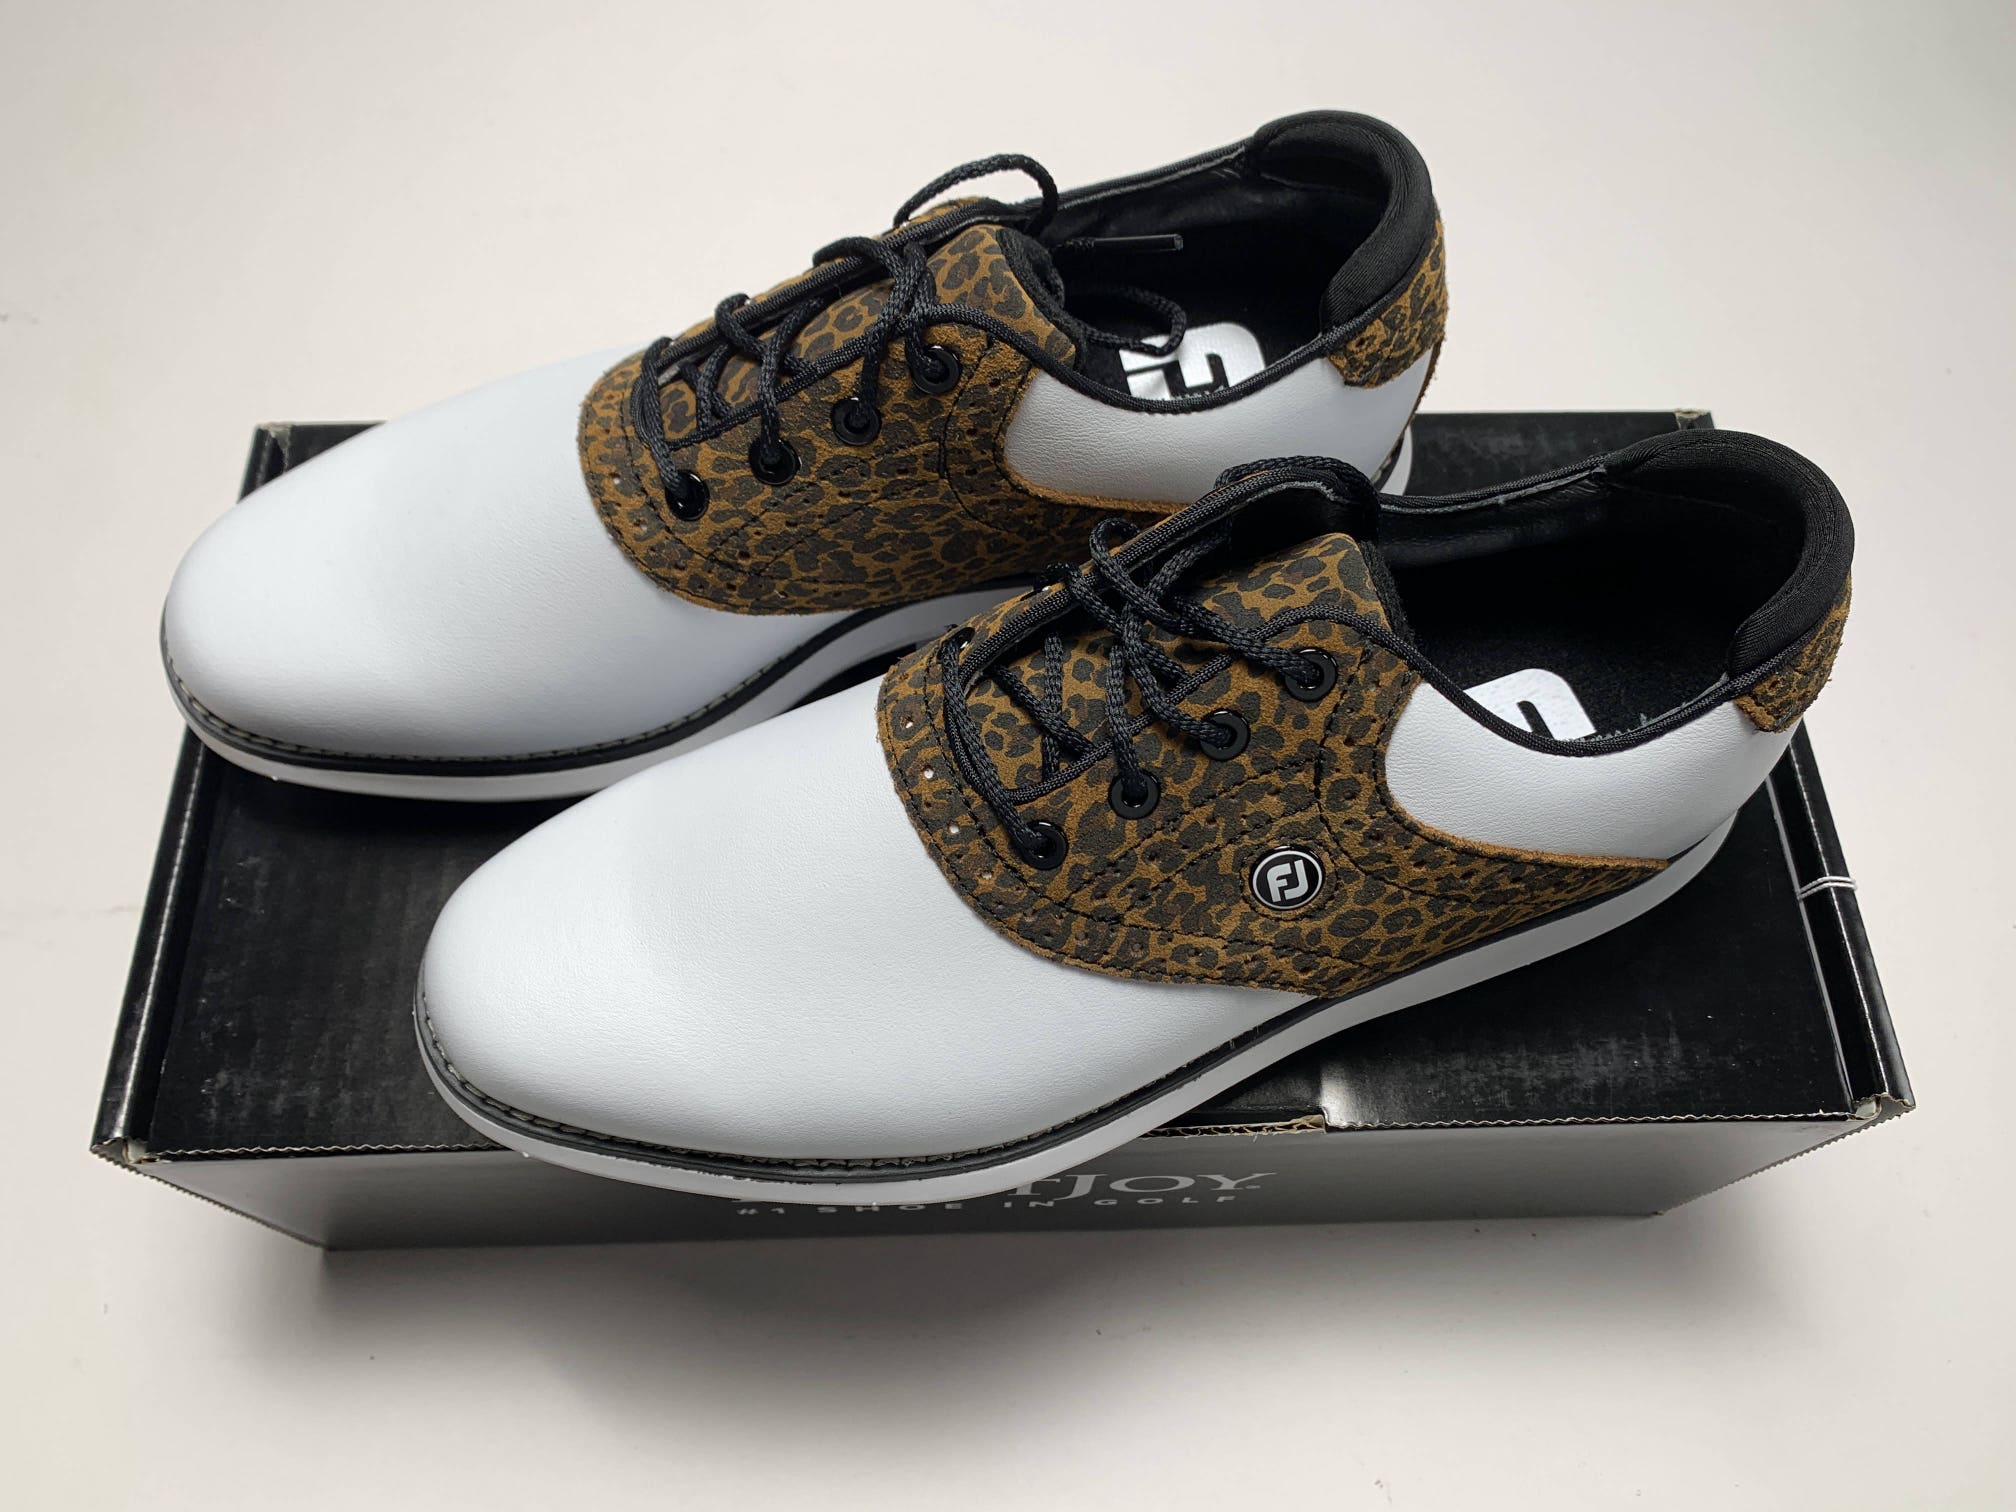 FootJoy FJ Traditions Golf Shoes White Brown Leopard Women's SZ 7 (97923)